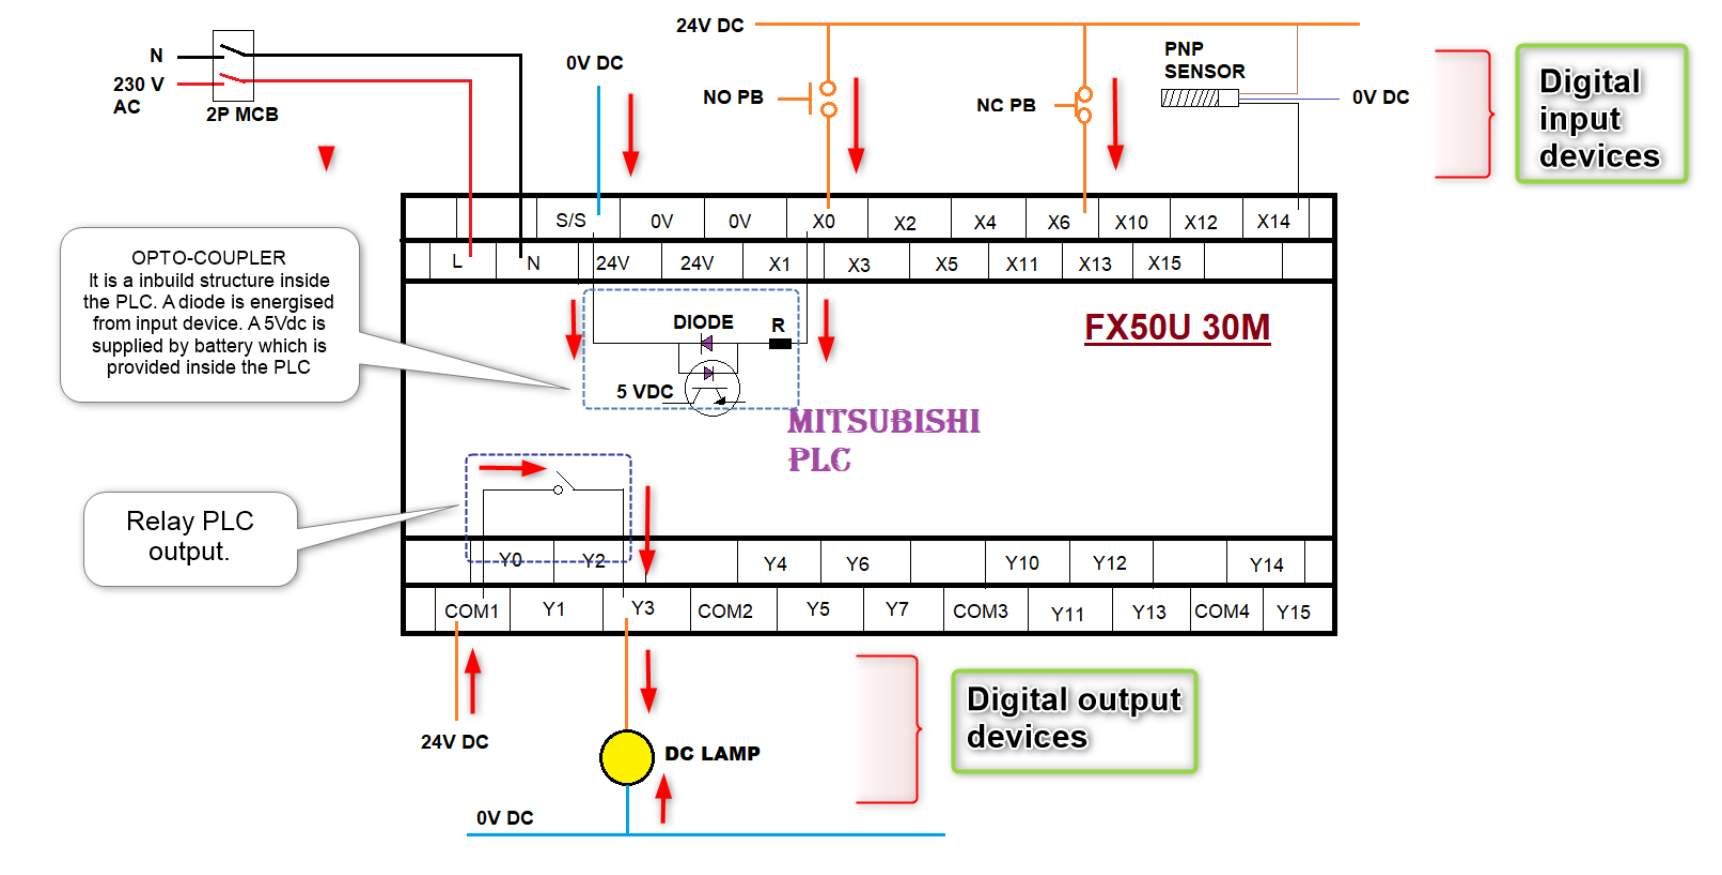 Mitsubishi PLC wiring configuration